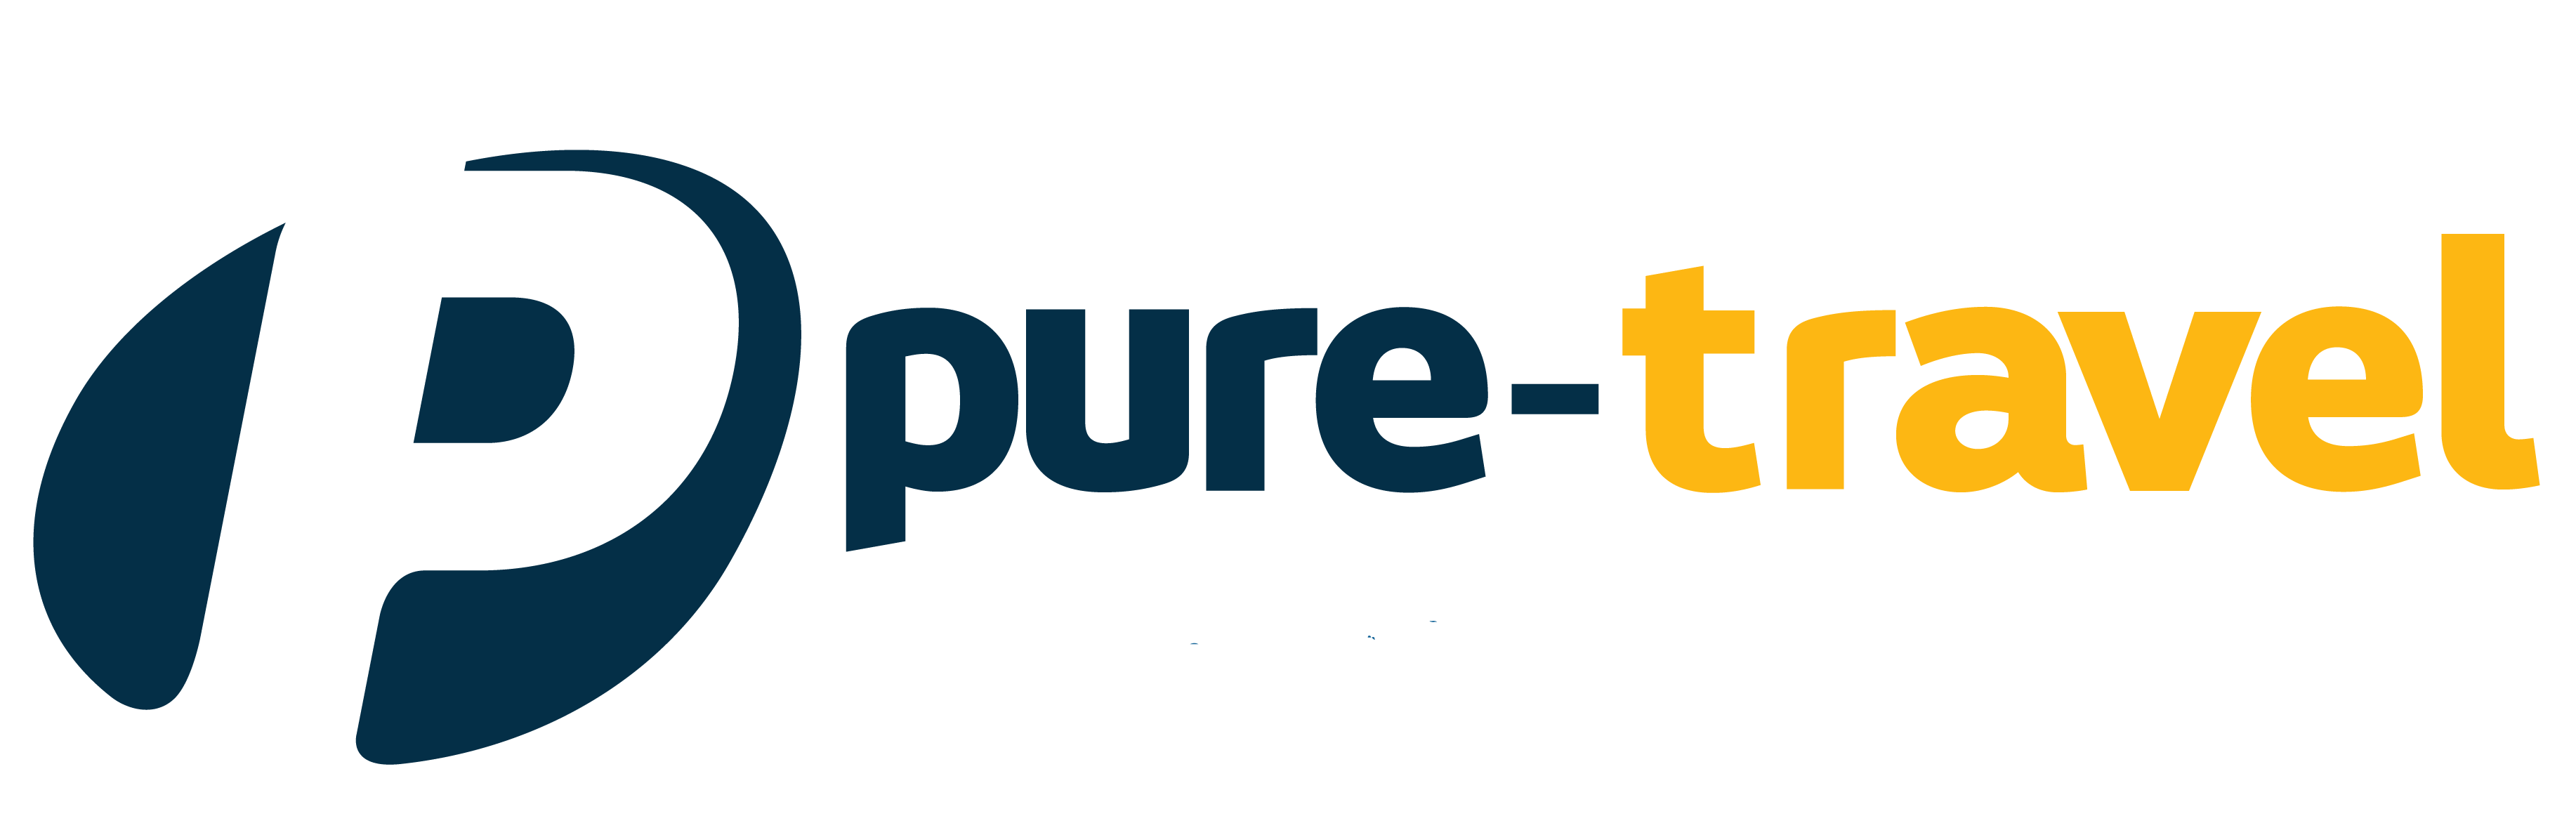 Pure travel logo